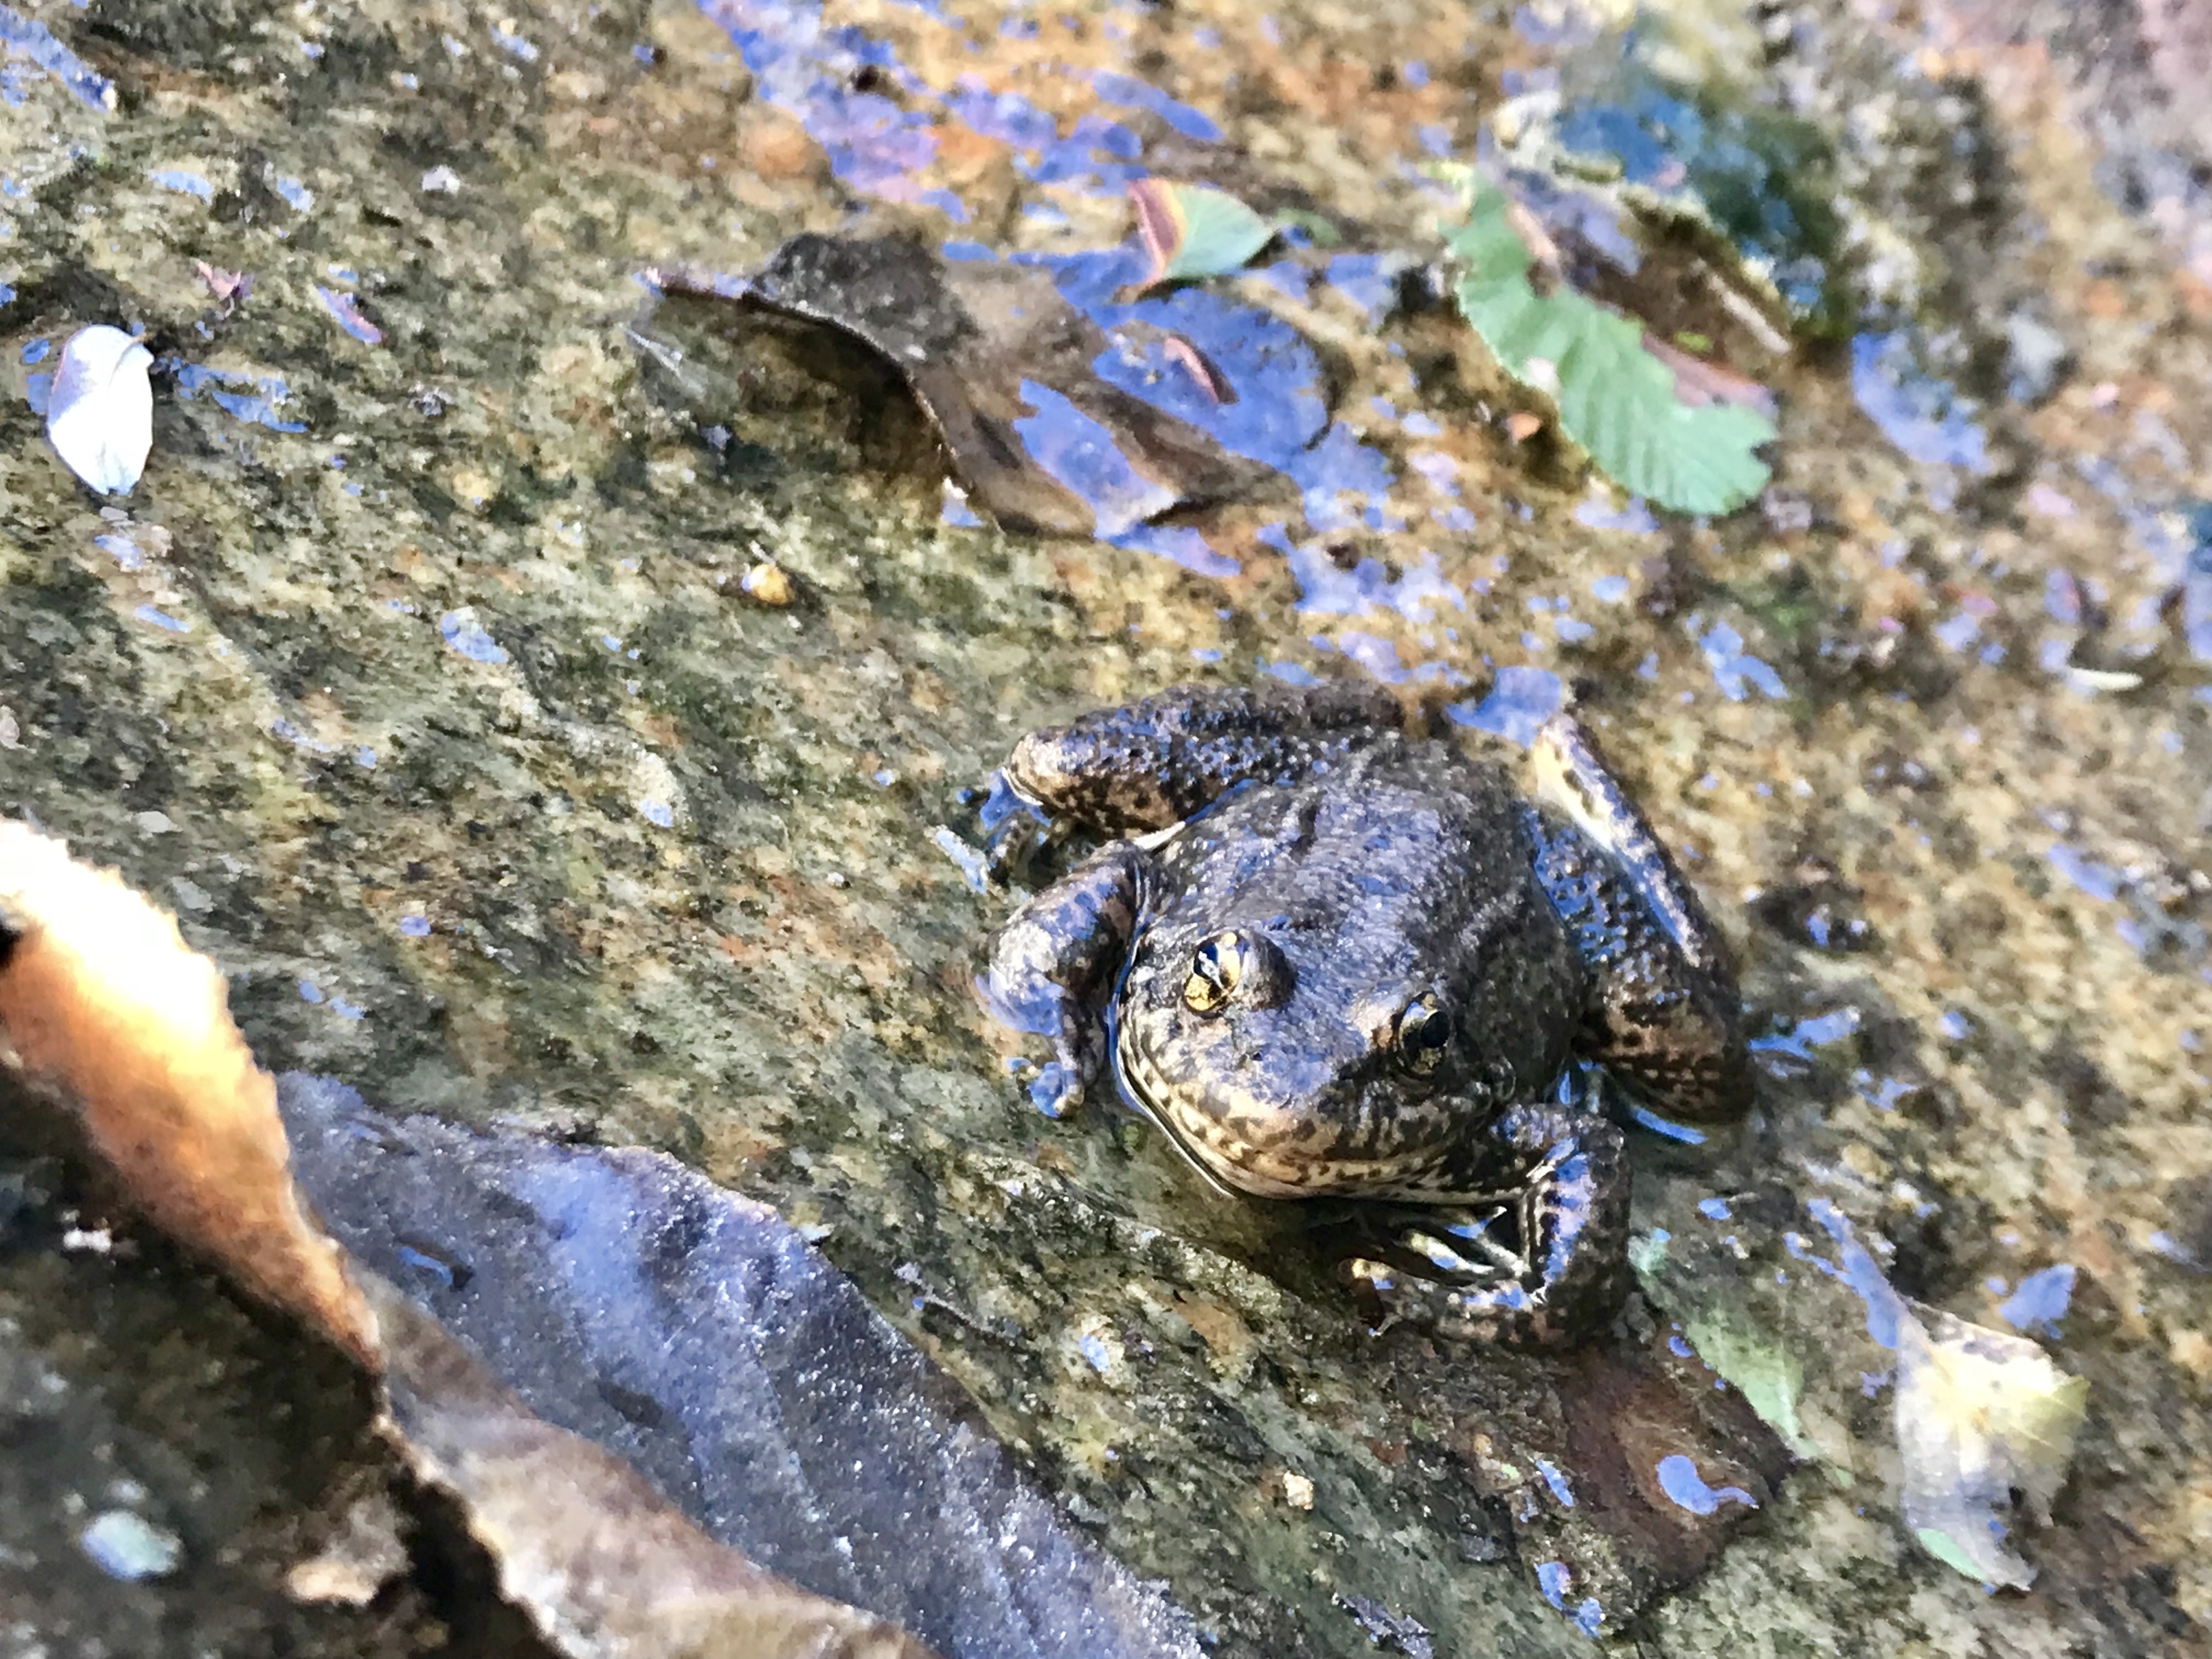 Bullfrogs and Biodiversity, Conservancy Program